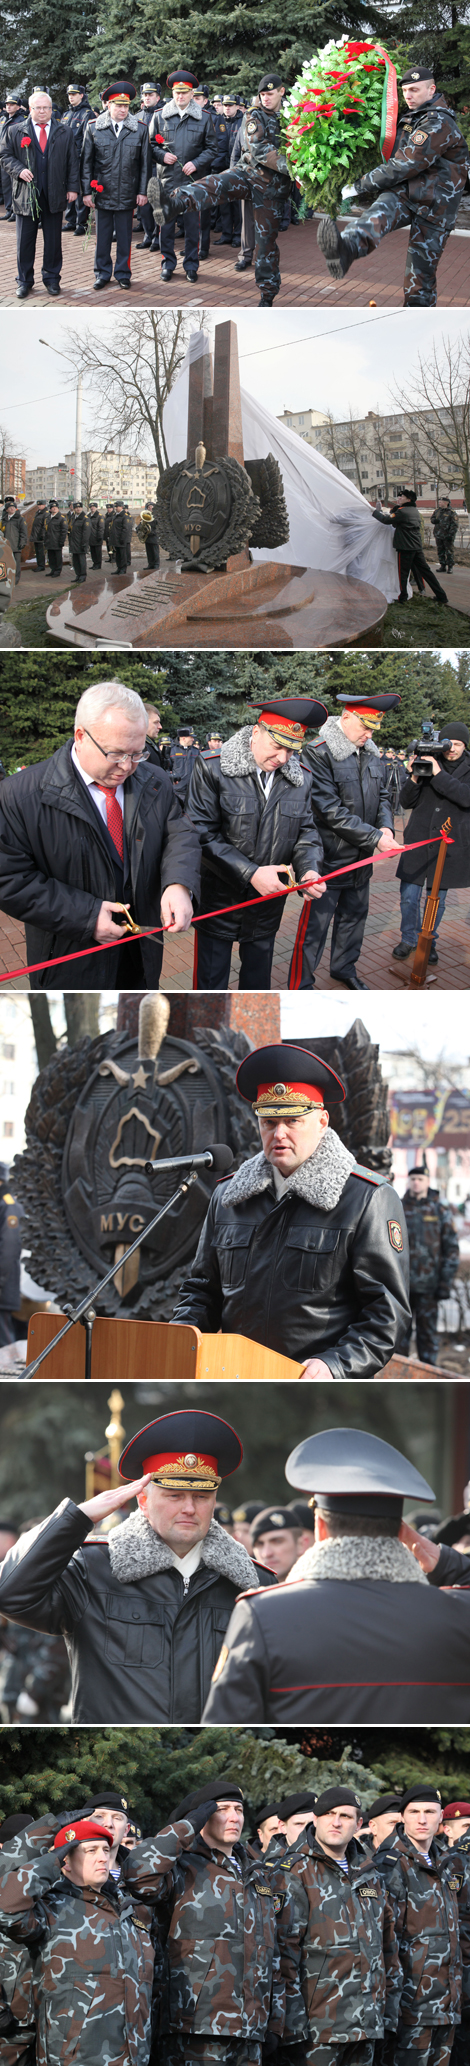 Renewed memorial opened in Vitebsk in anticipation of Belarusian police 100th anniversary